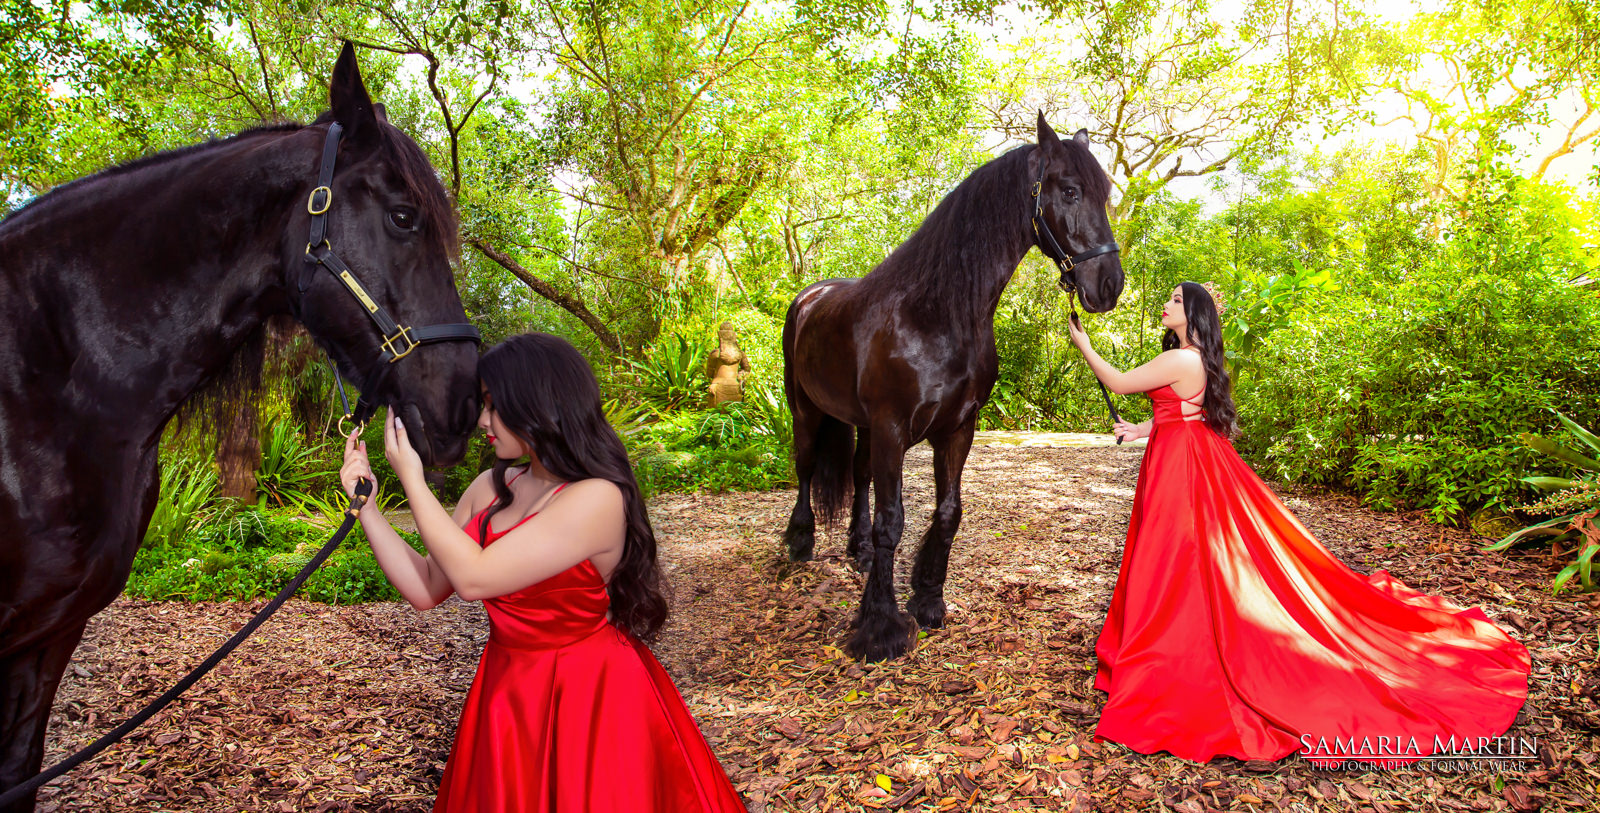 quinceanera with horses, quinceanera photoshoot in the forest, sweet 15, 15 photoshoot with horses, best Tampa photographer, Samaria Martin 1